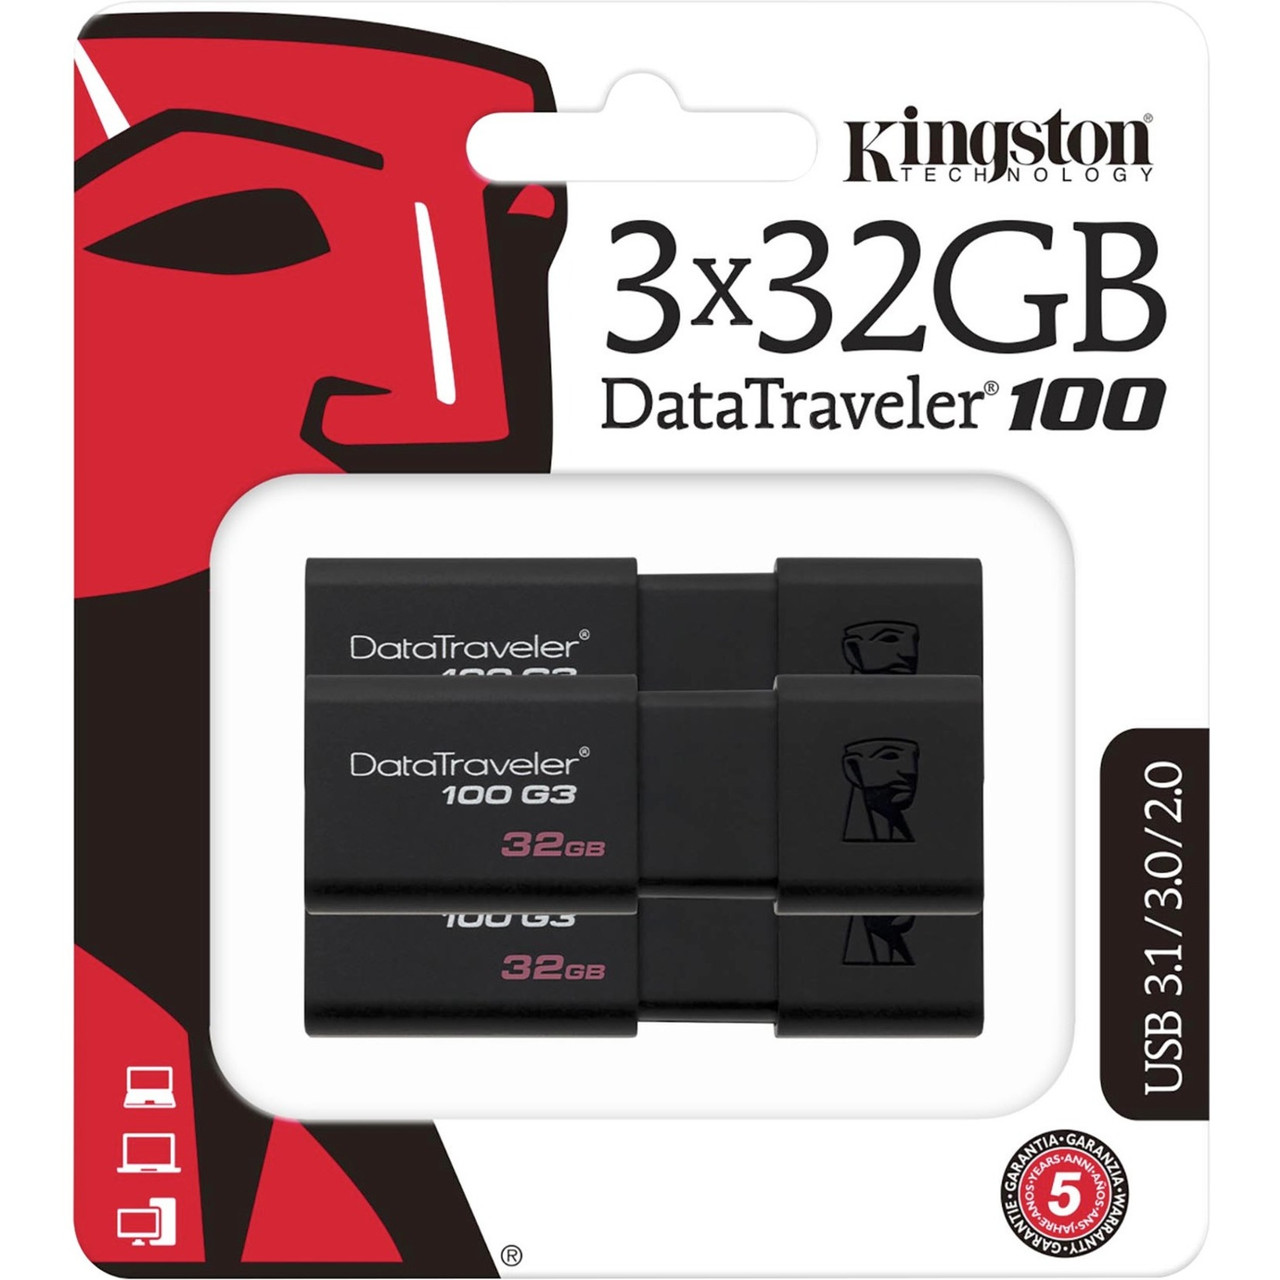 Kingston DataTraveler 100 G3 USB Flash Drive - DT100G3/32GB-3P